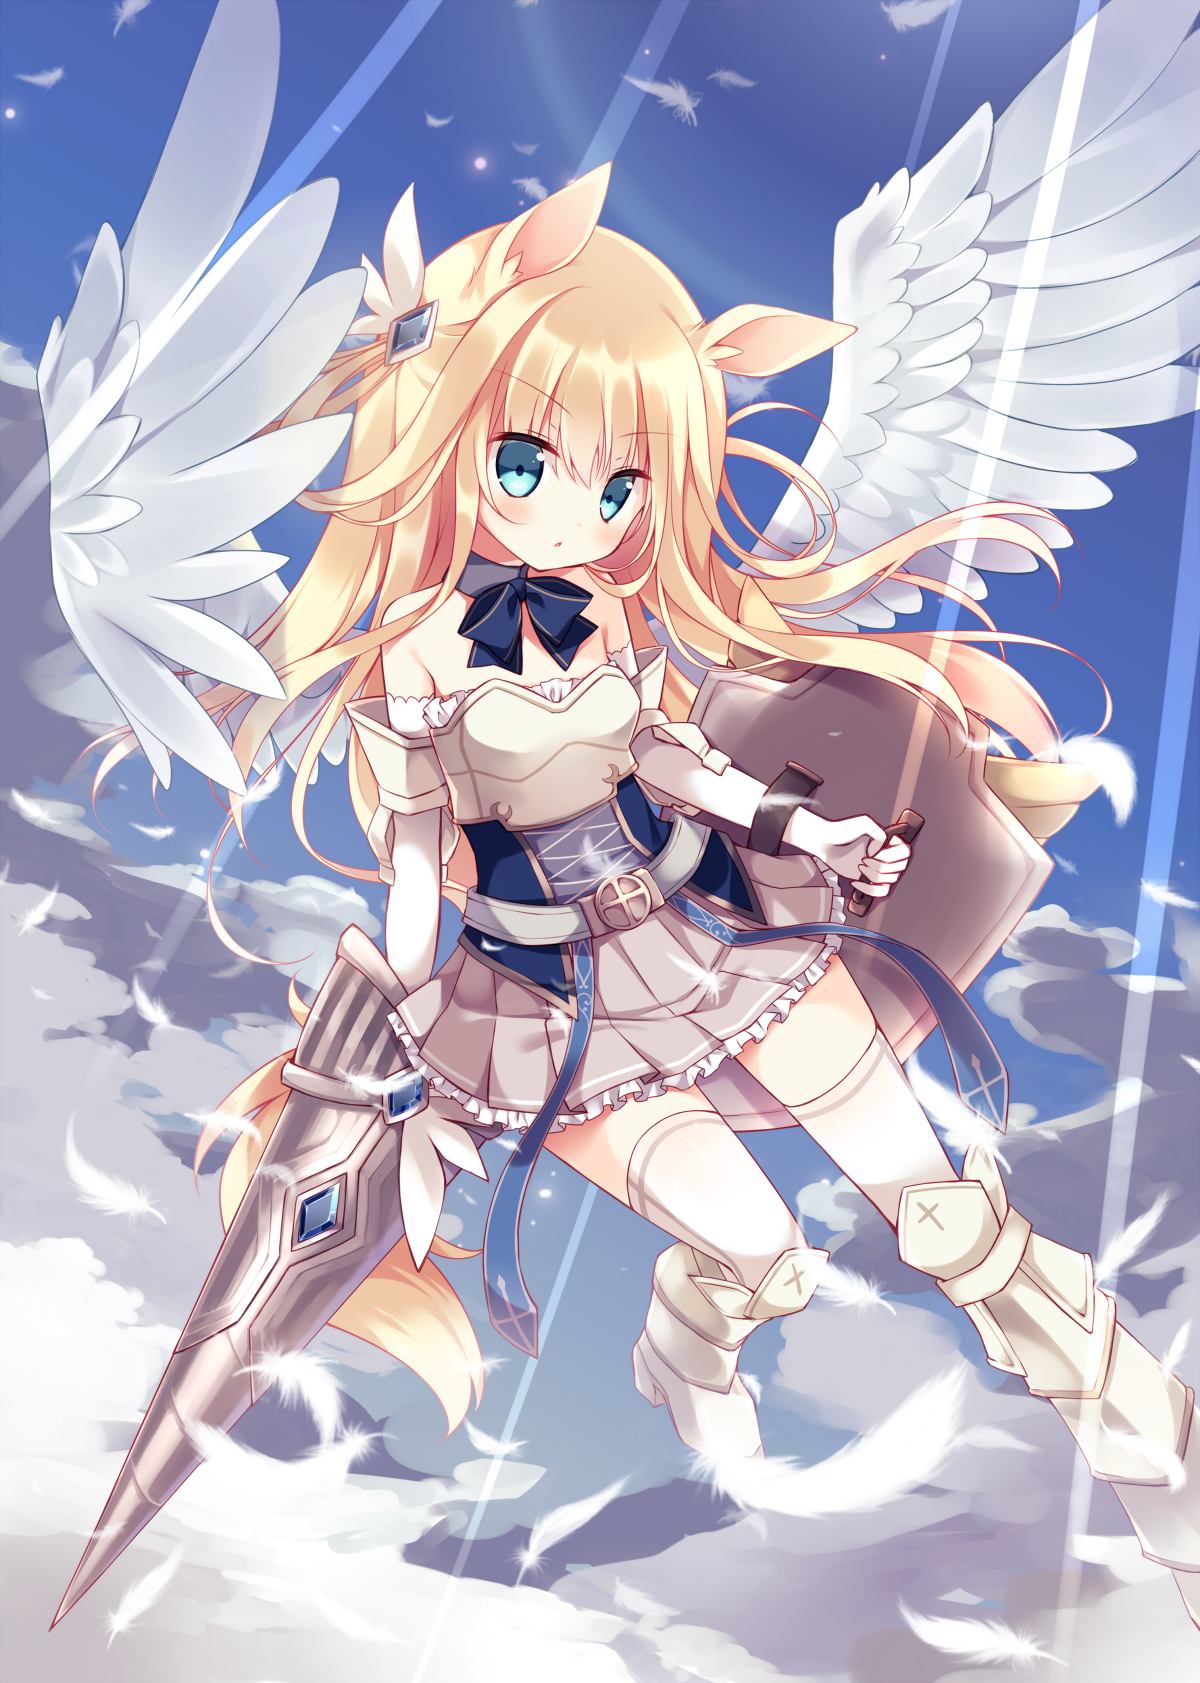 Anime 1200x1683 anime girls 2D artwork Hoshi blonde aqua eyes wings shield lance animal ears